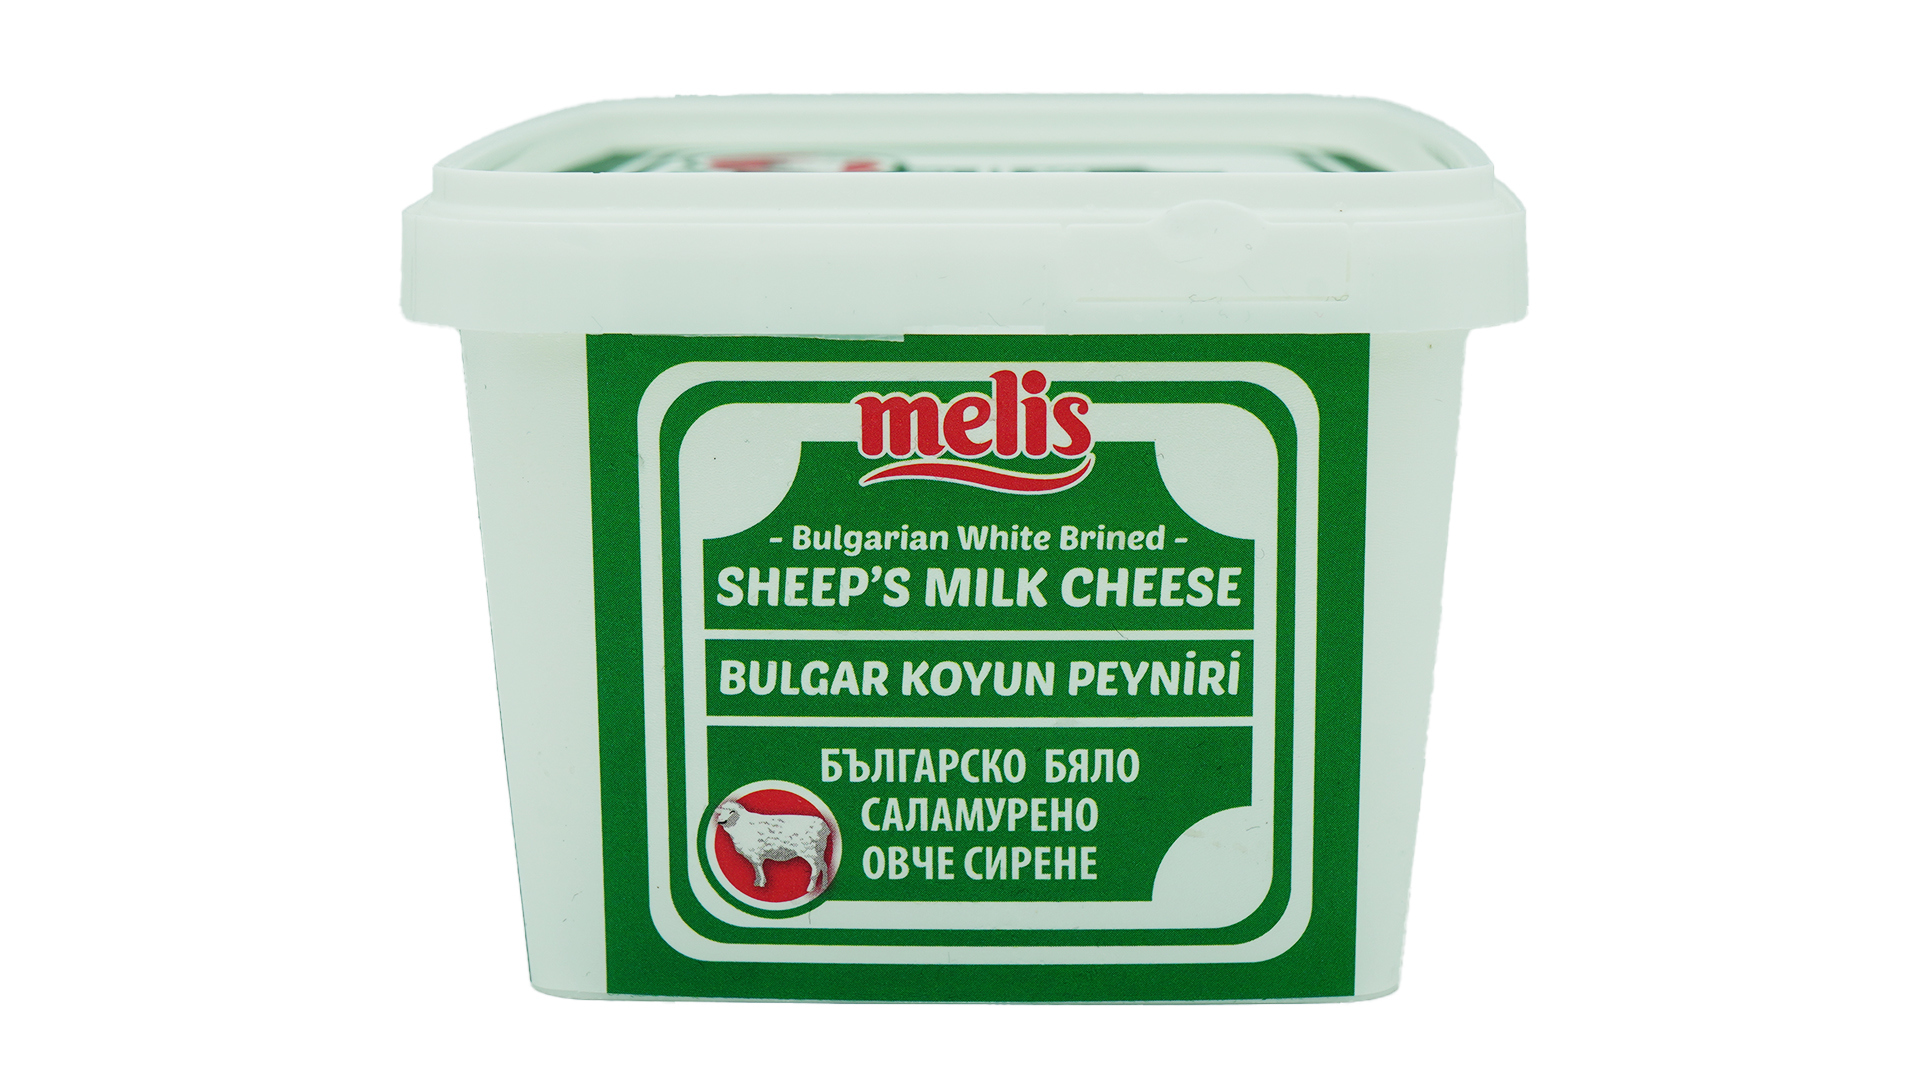 Melis sheepss milk cheese 400g 4